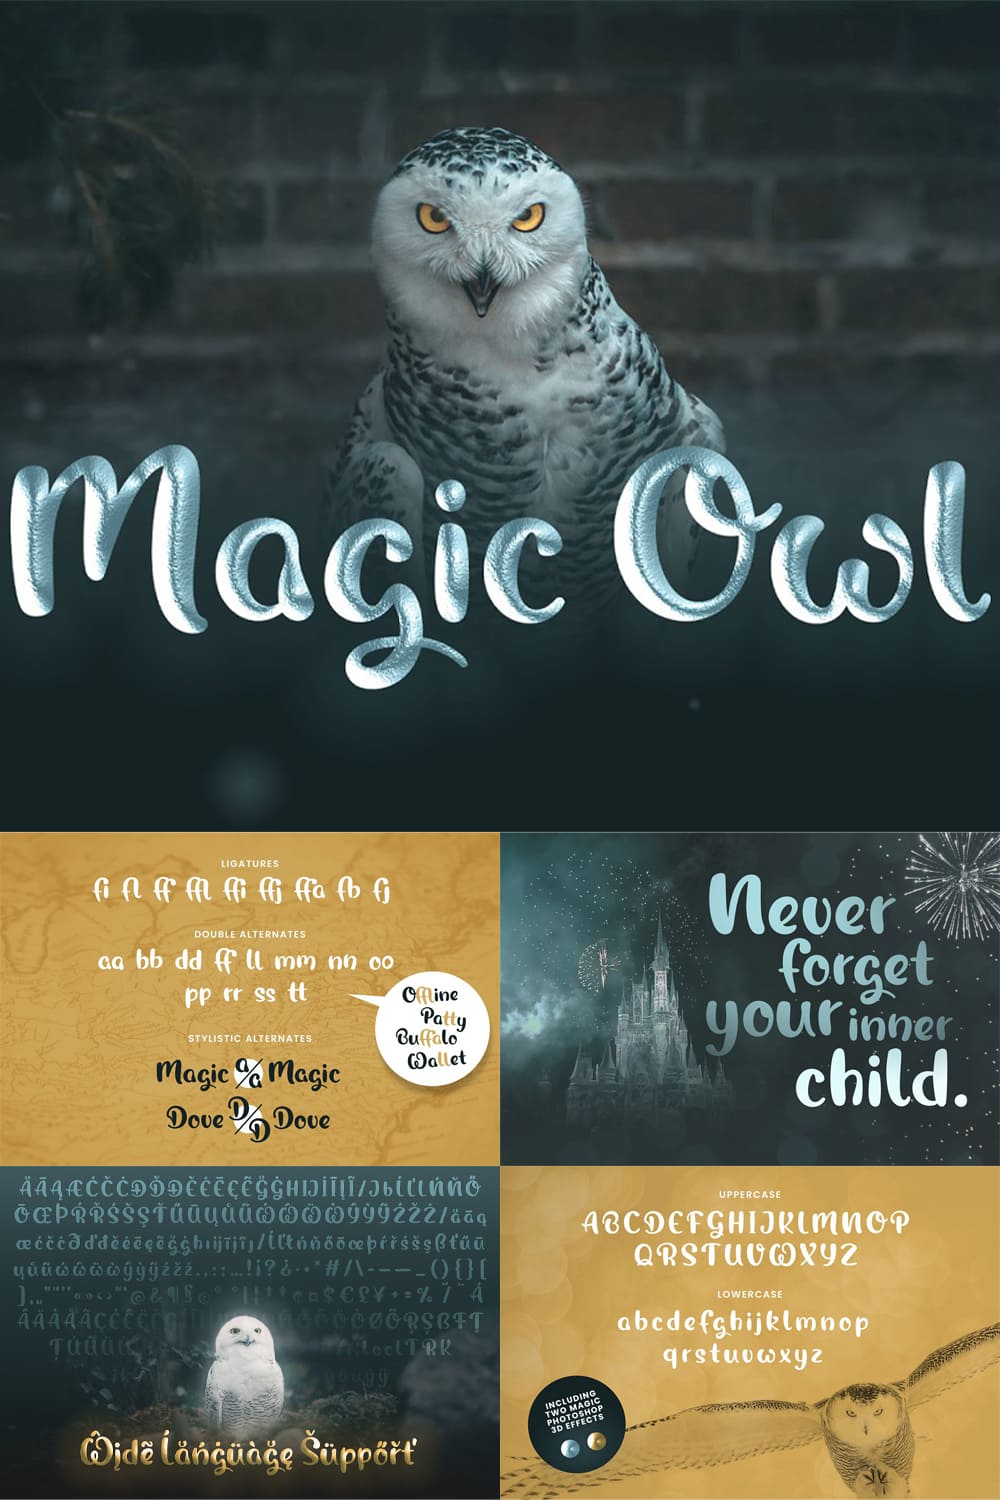 Magic owl an enchanting typeface pinterest .